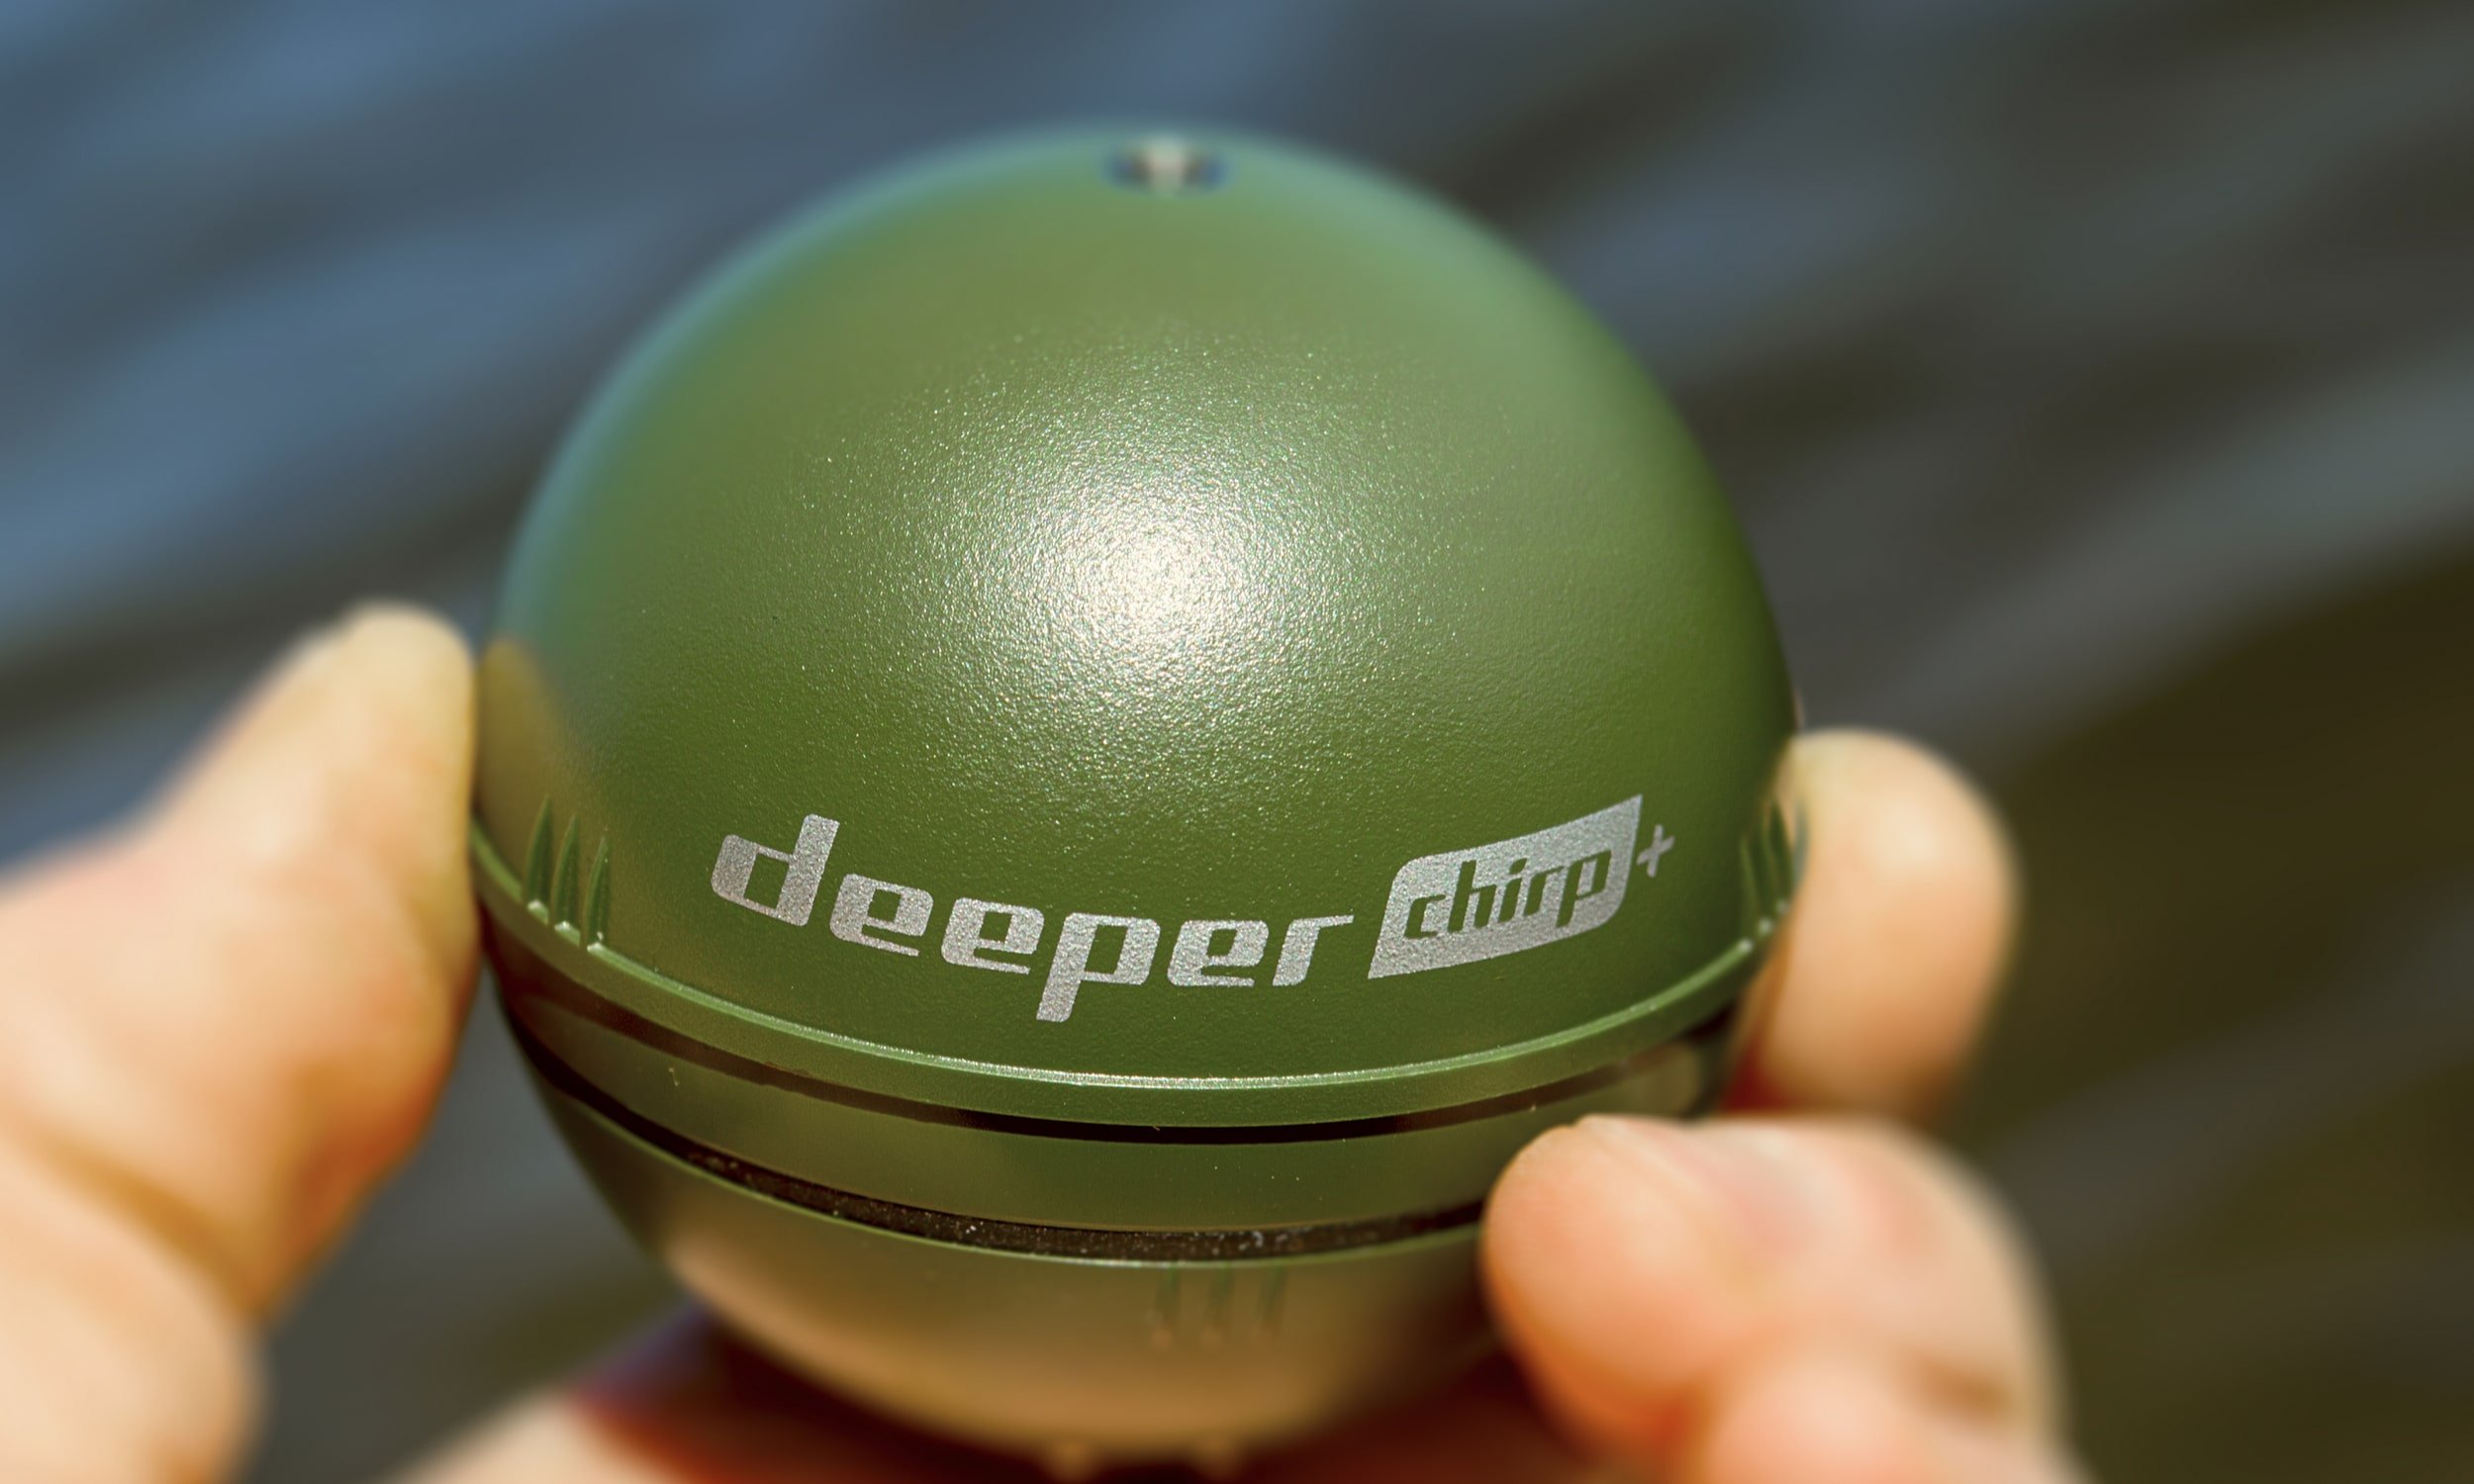 deeper smart sonar chirp+ echolotas